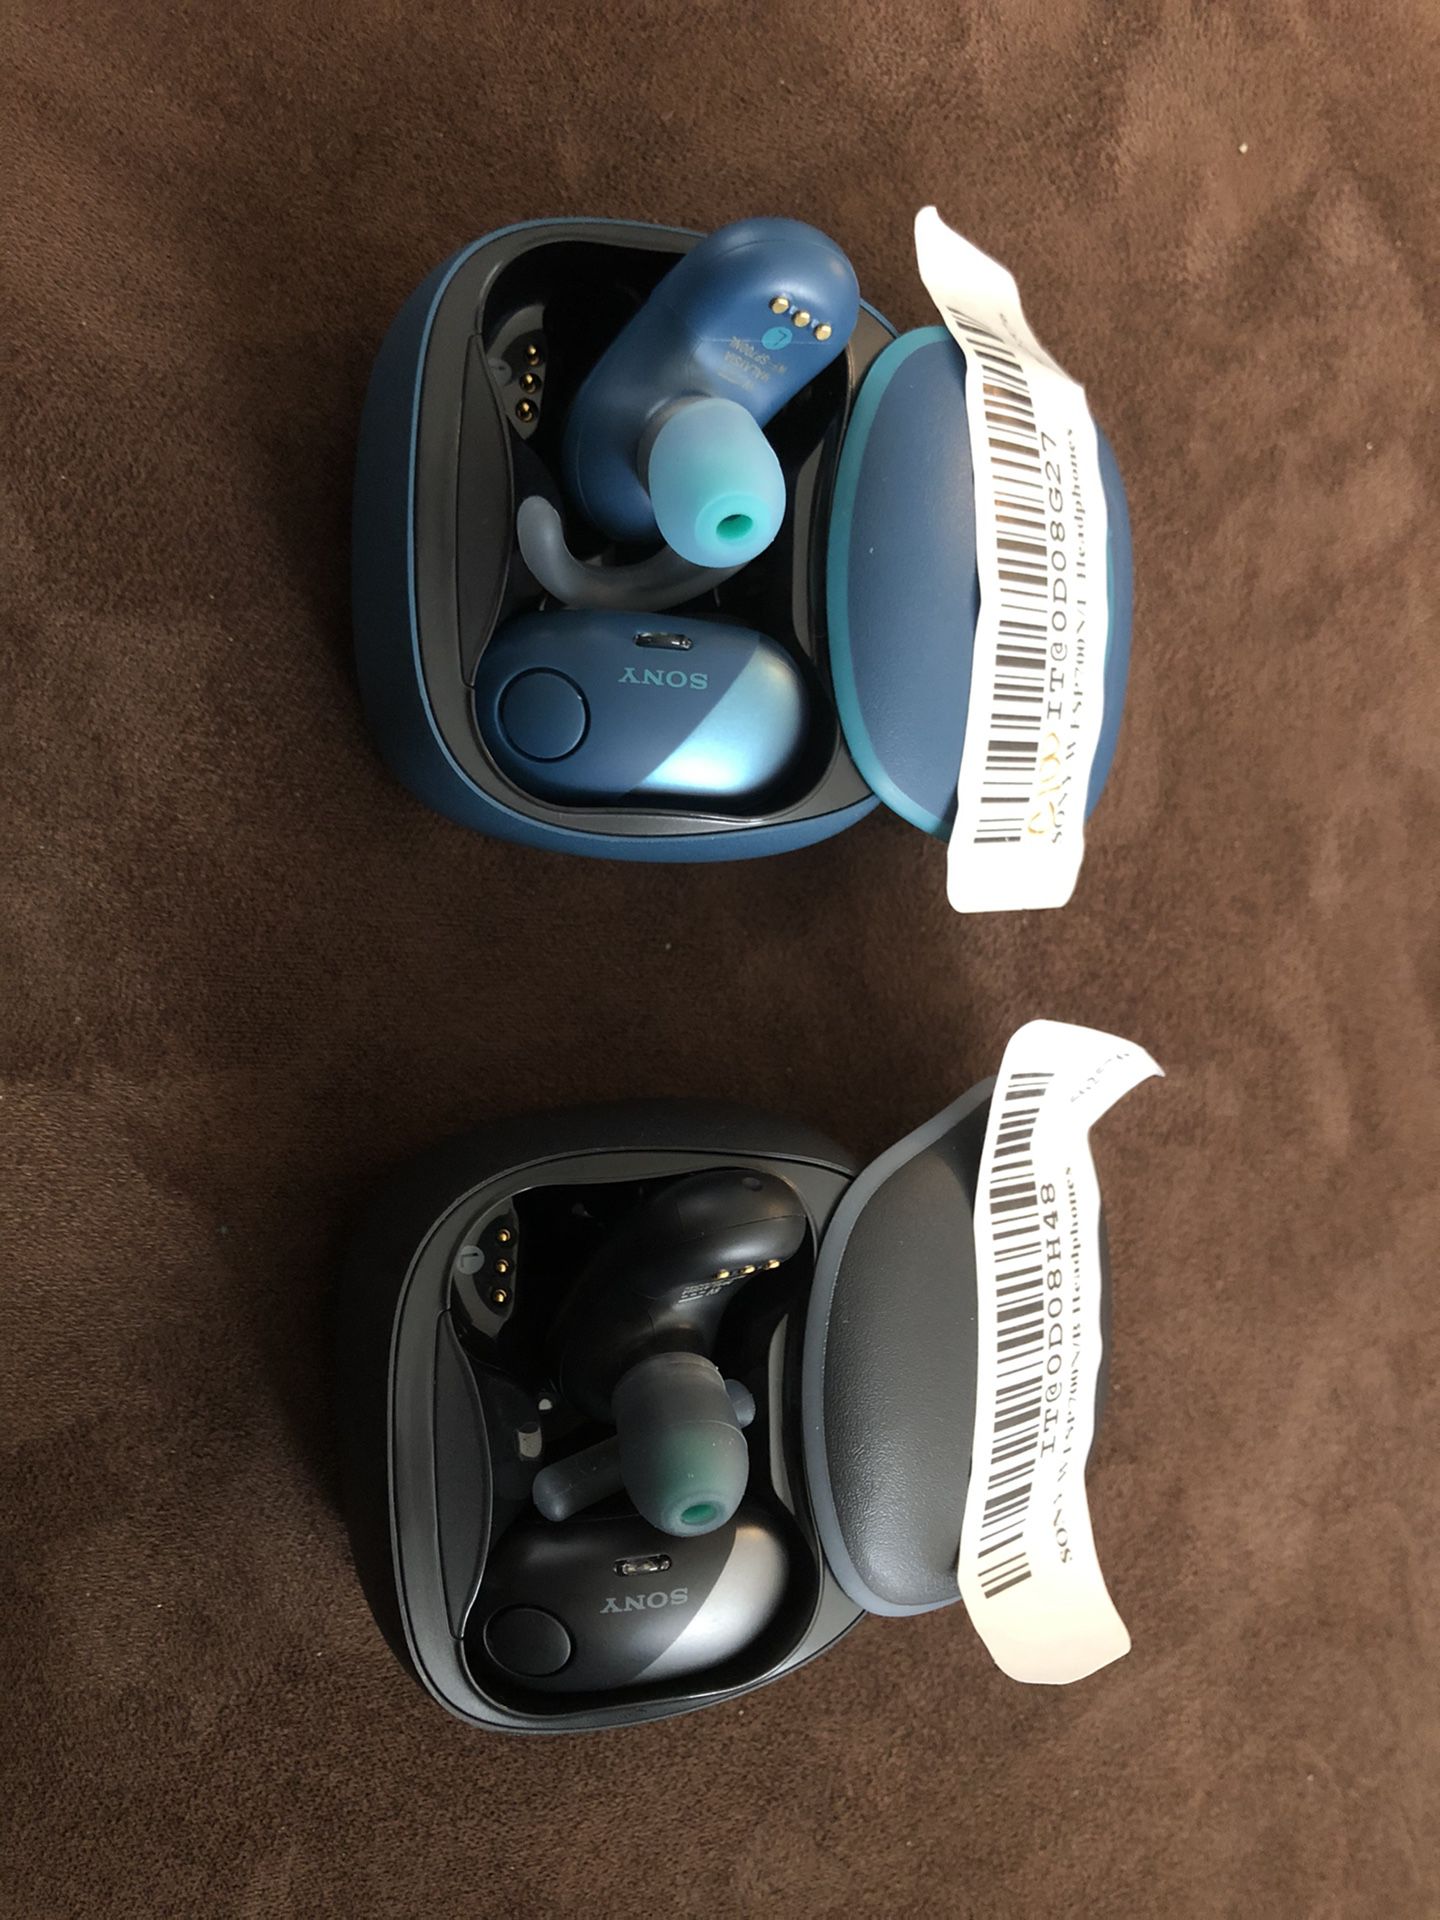 SONY WF-SP700N Wireless Bluetooth Noise Cancelling Earbud Headphones (Black & Blue) Like-New